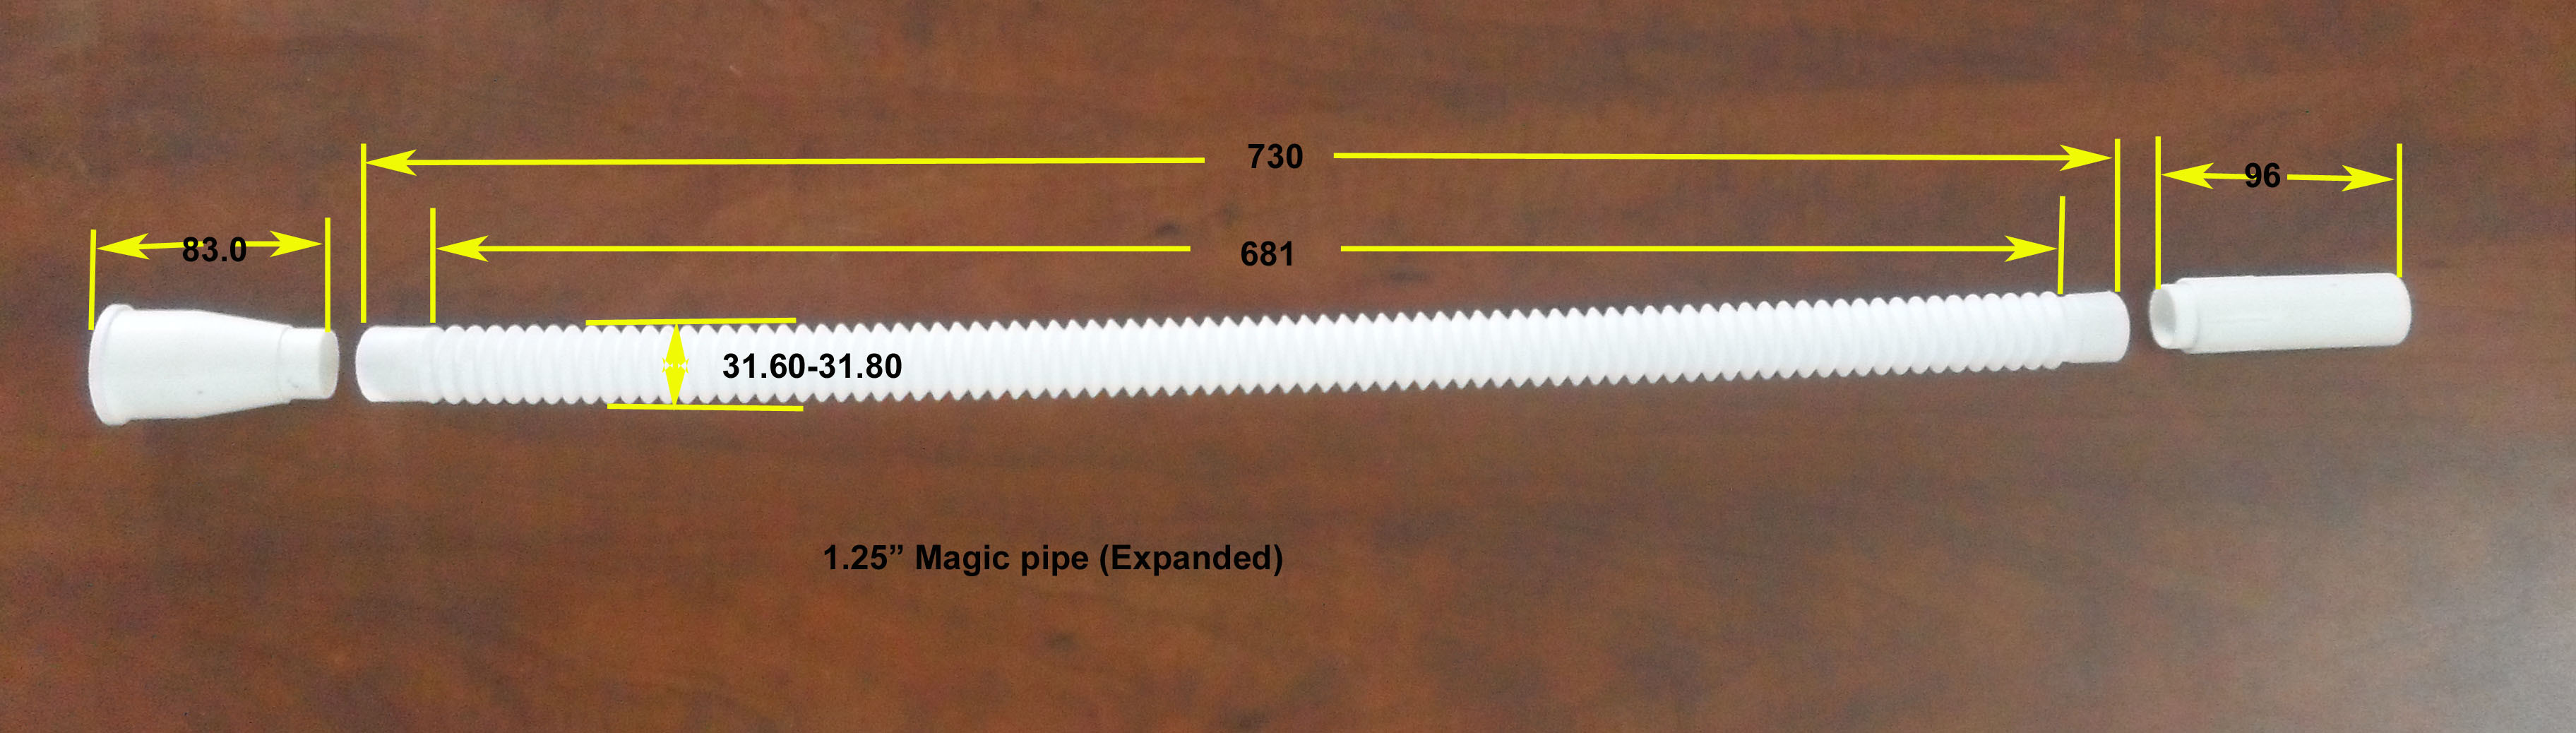 magic corrugated pipe